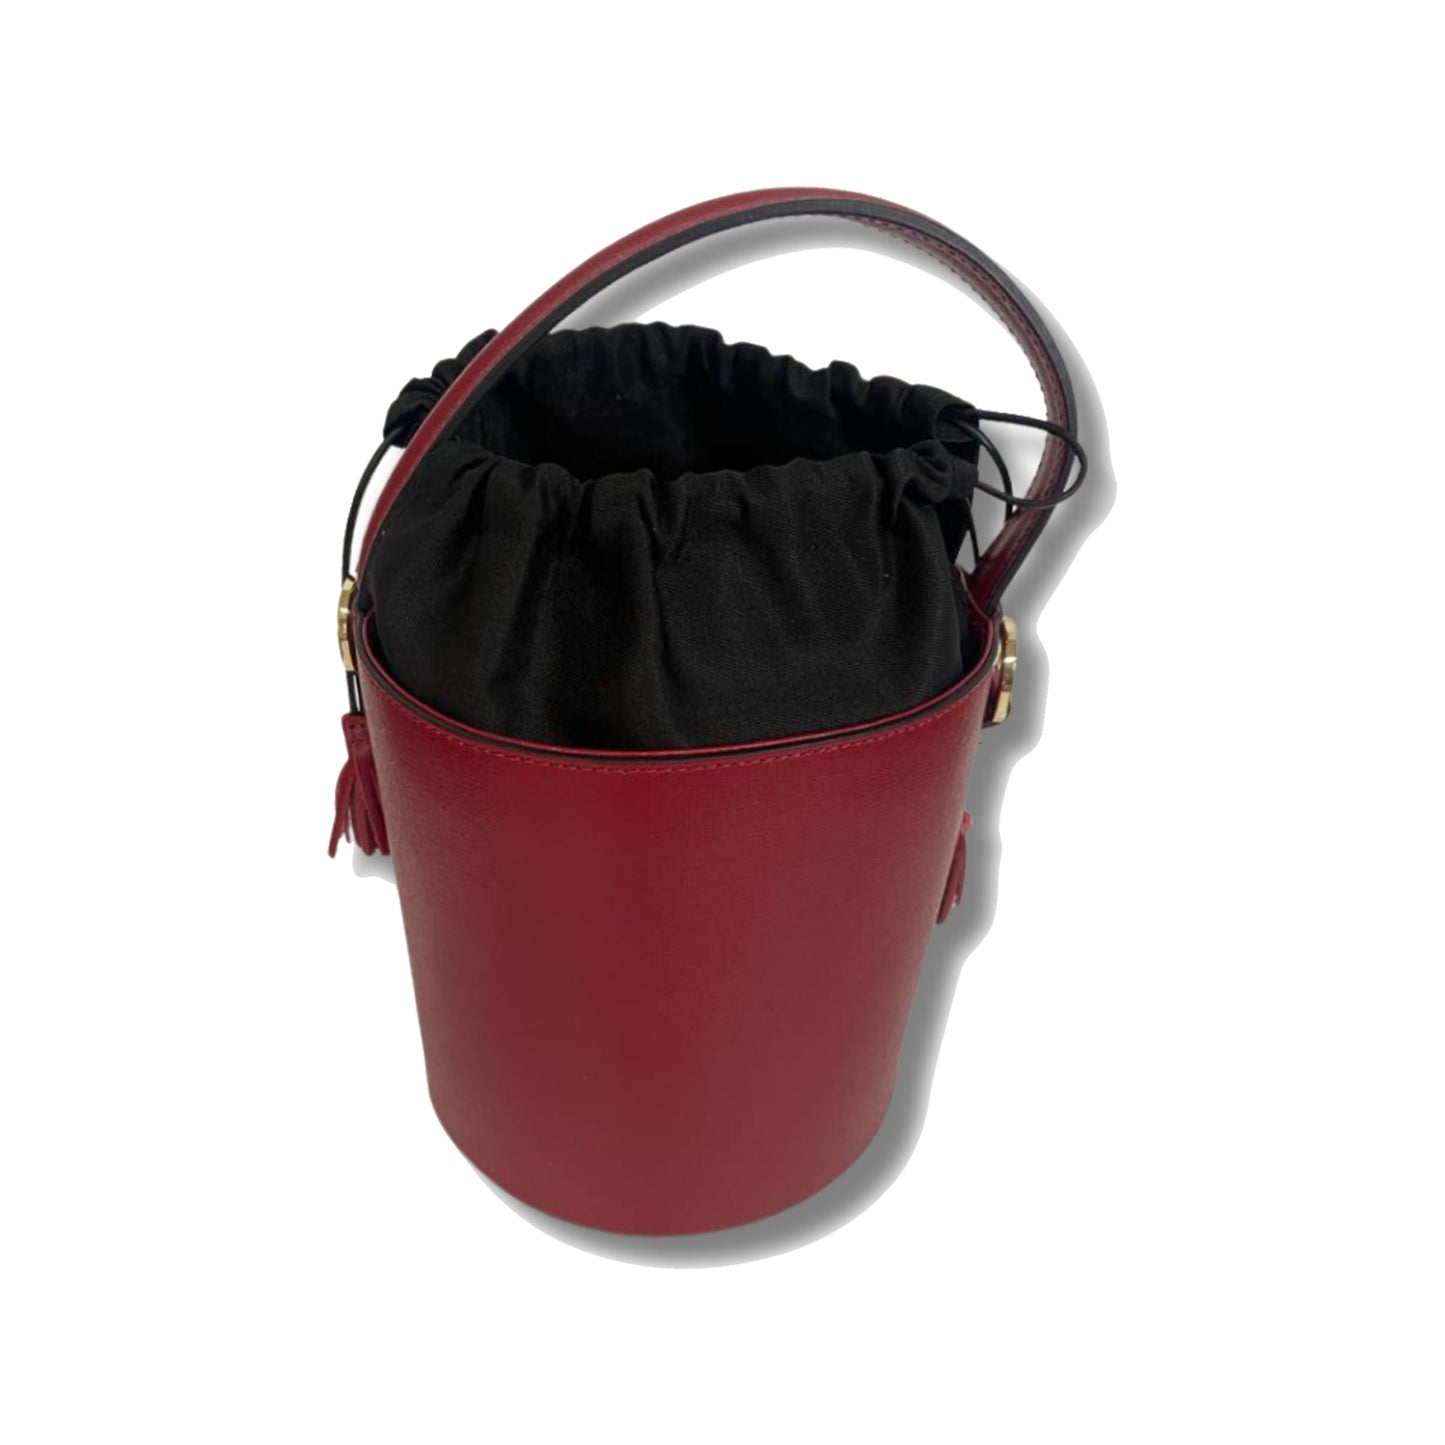 Burgundy - Bucket Bag